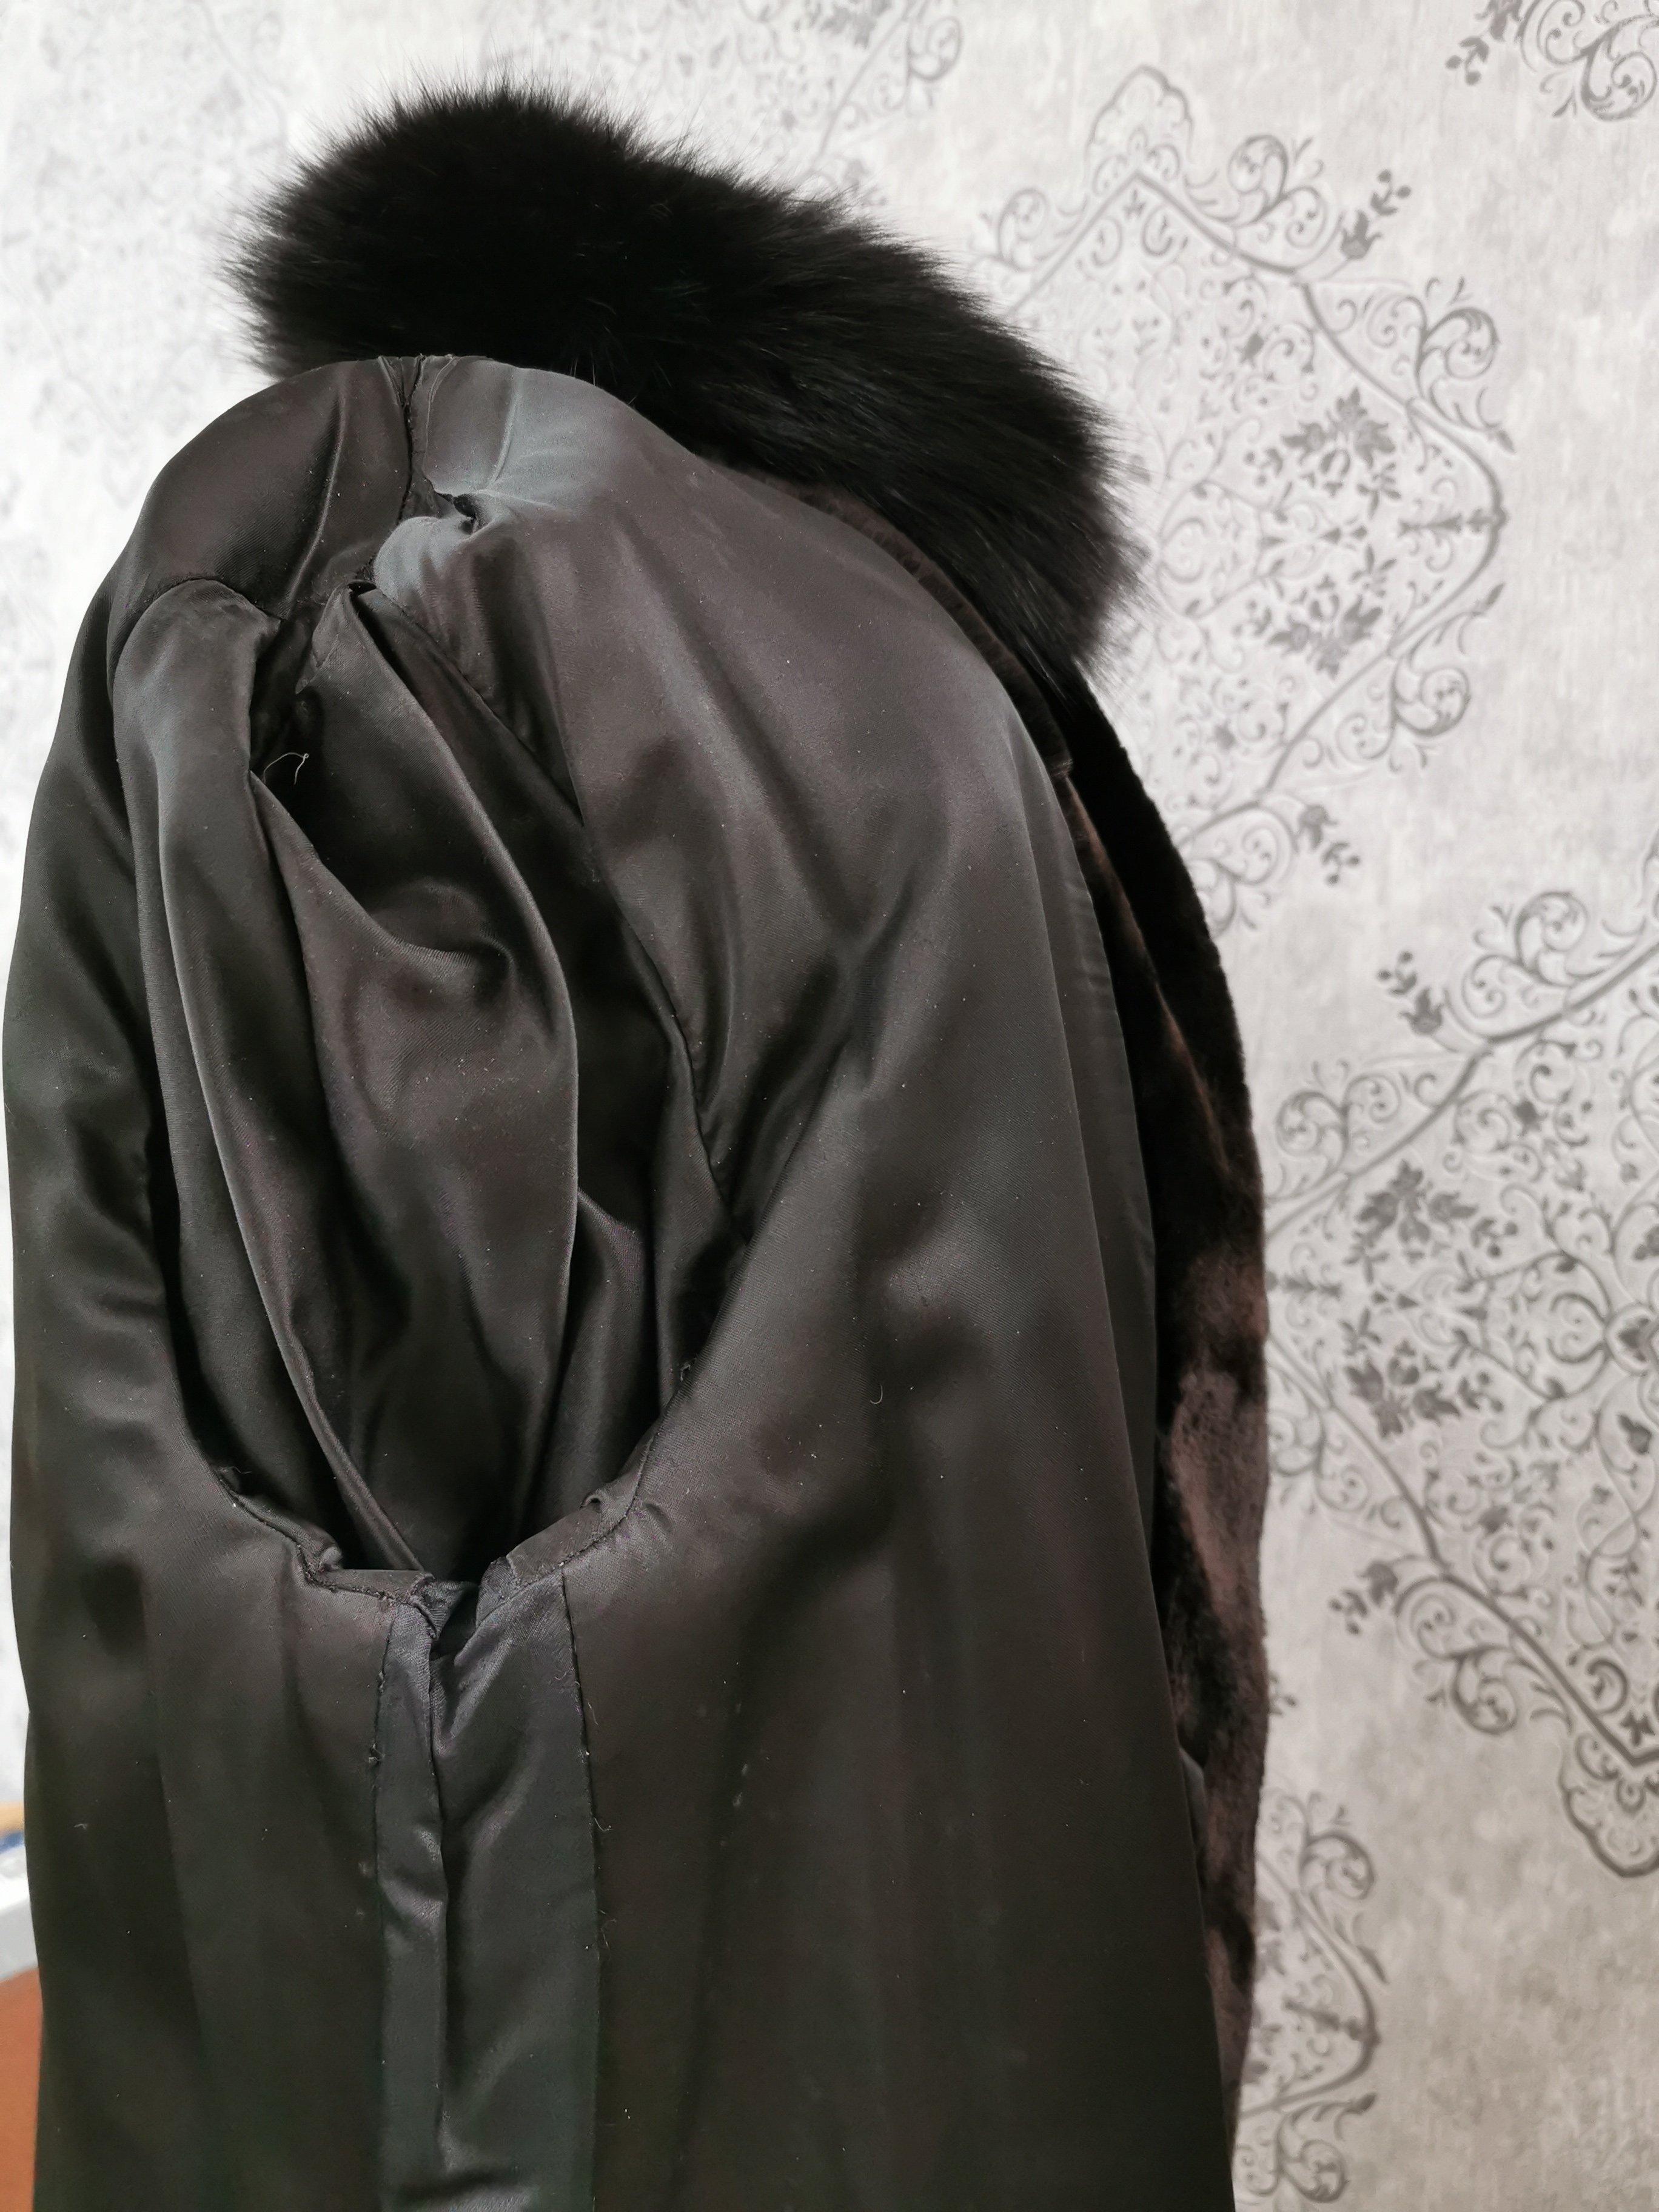 Holt Renfrew Alaskan seal fur coat with fox fur trim size 8 3